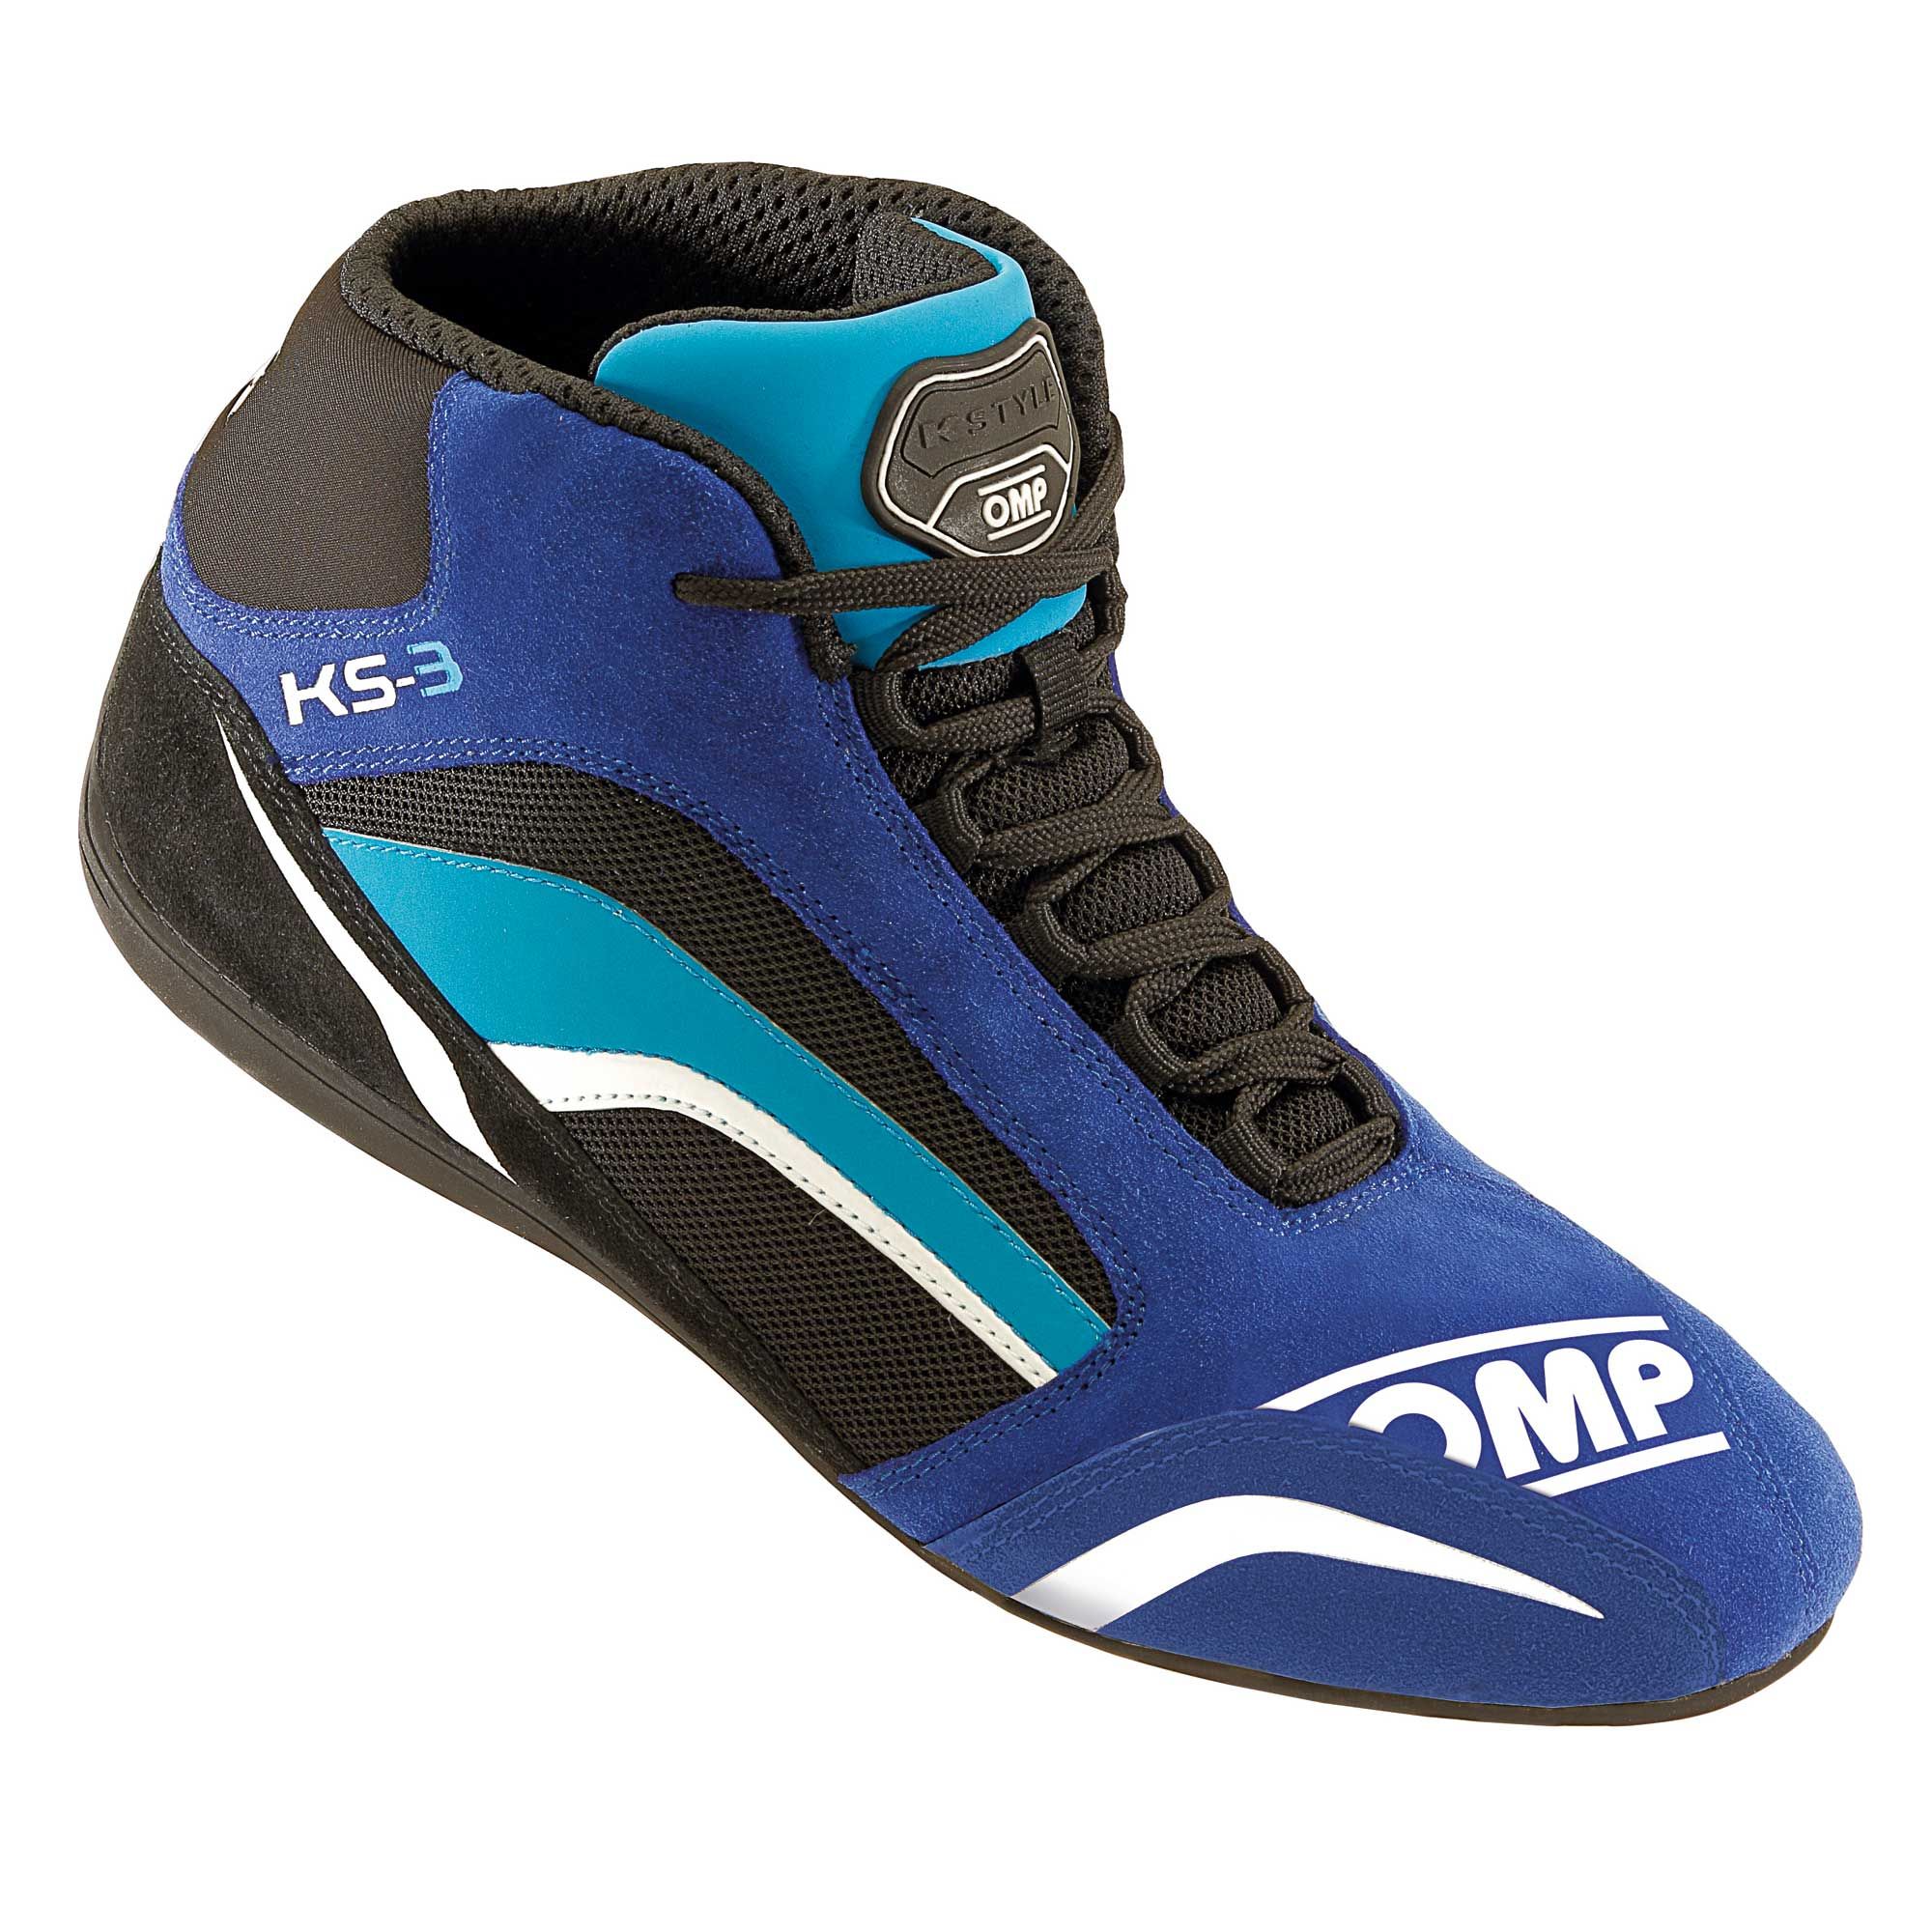 OMP KS-3 Go-Kart / Karting Track / Race / Racing Suede Leather Boots | eBay